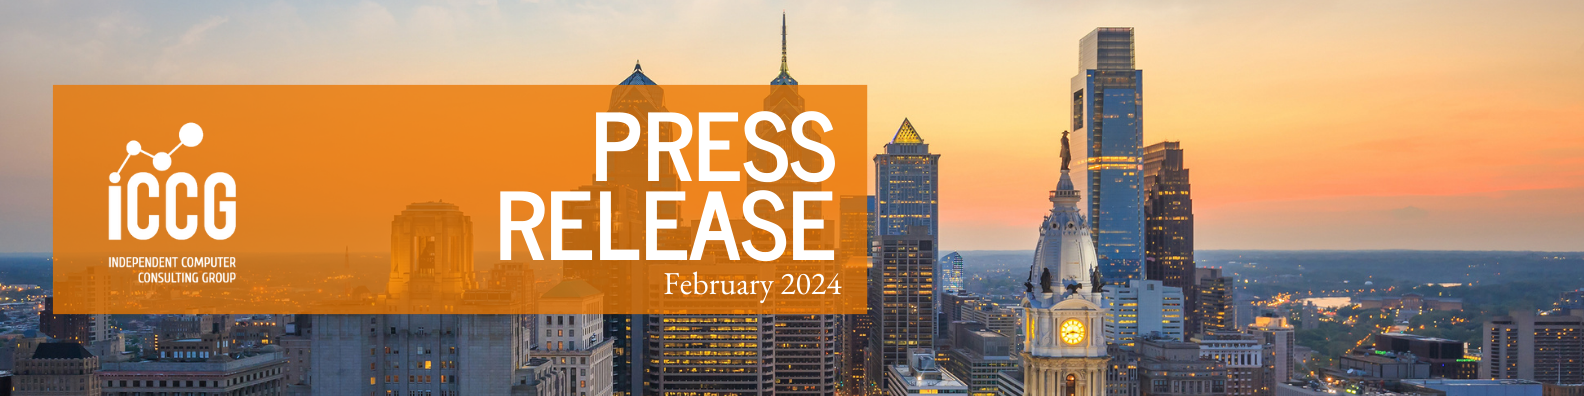 ICCG Press Release February